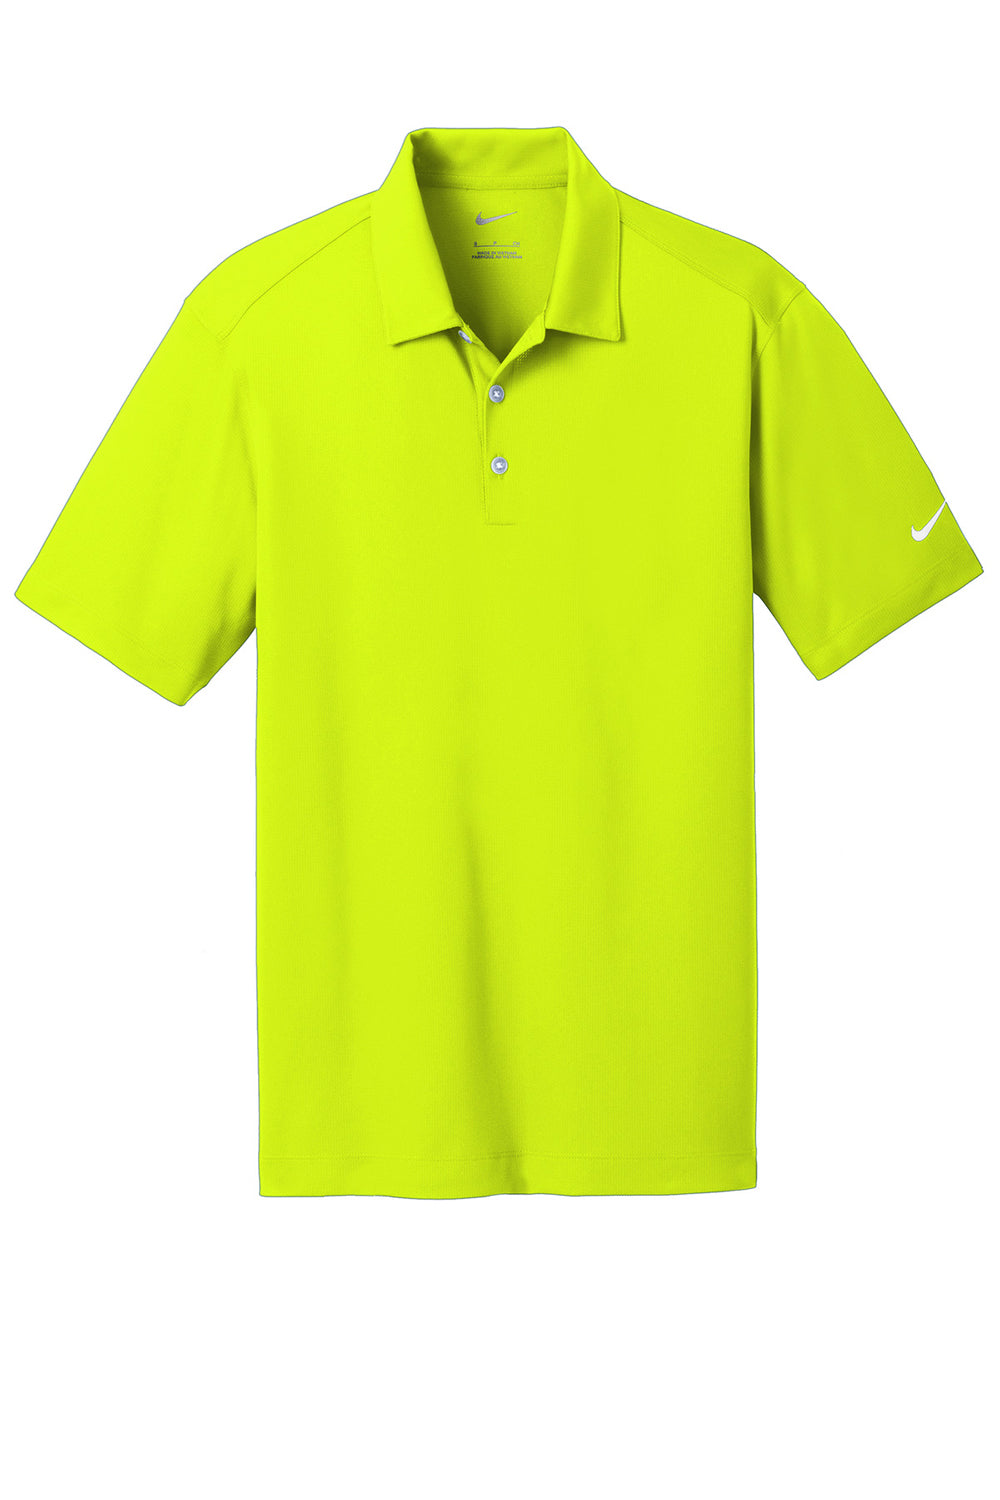 Nike 637167 Mens Dri-Fit Moisture Wicking Short Sleeve Polo Shirt Volt Green Flat Front